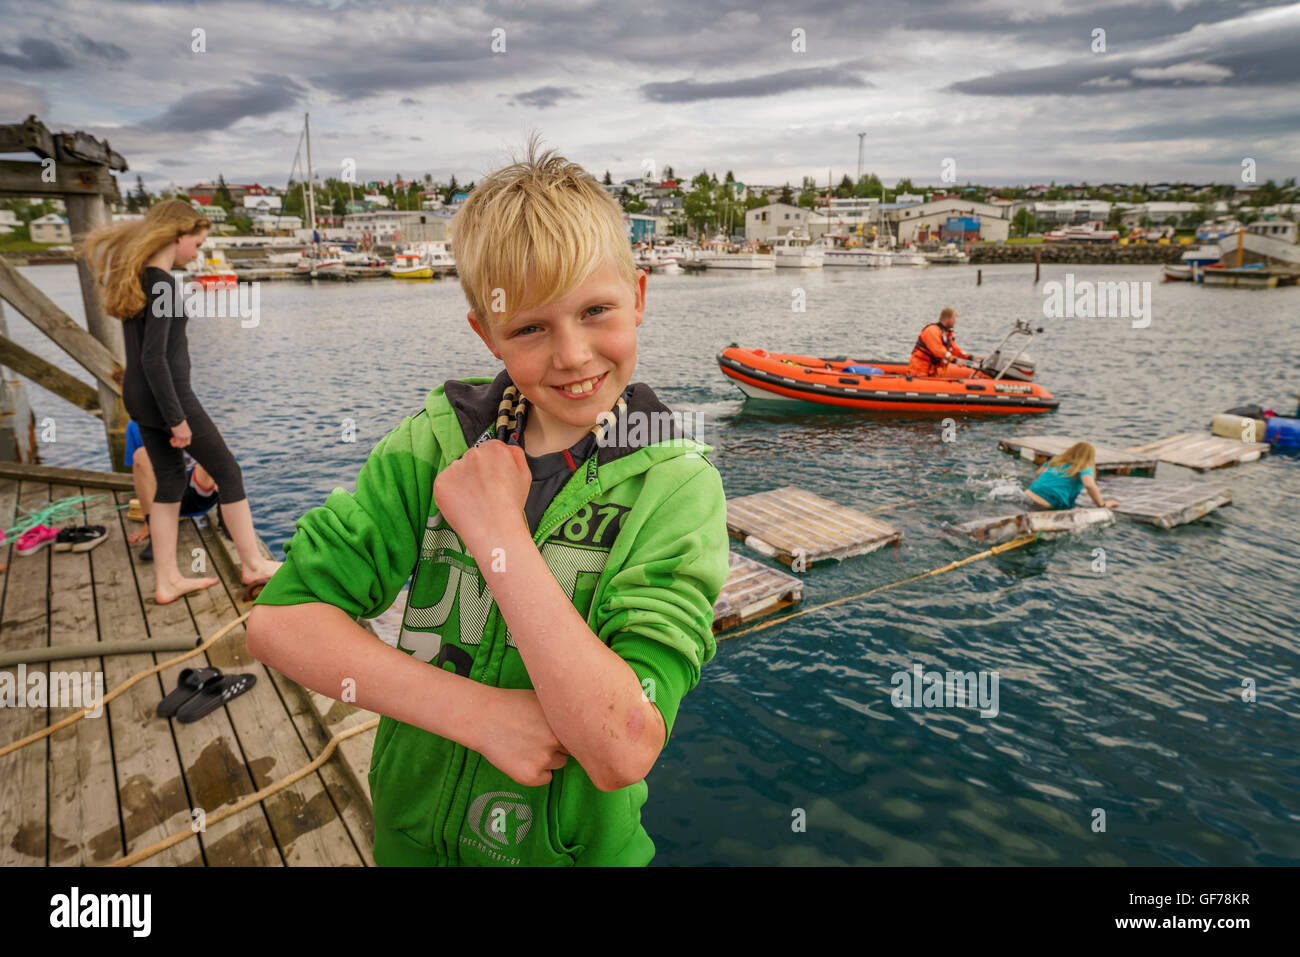 Boy making a fist at the Annual Seaman's Festival, Hafnarfjordur, Iceland Stock Photo